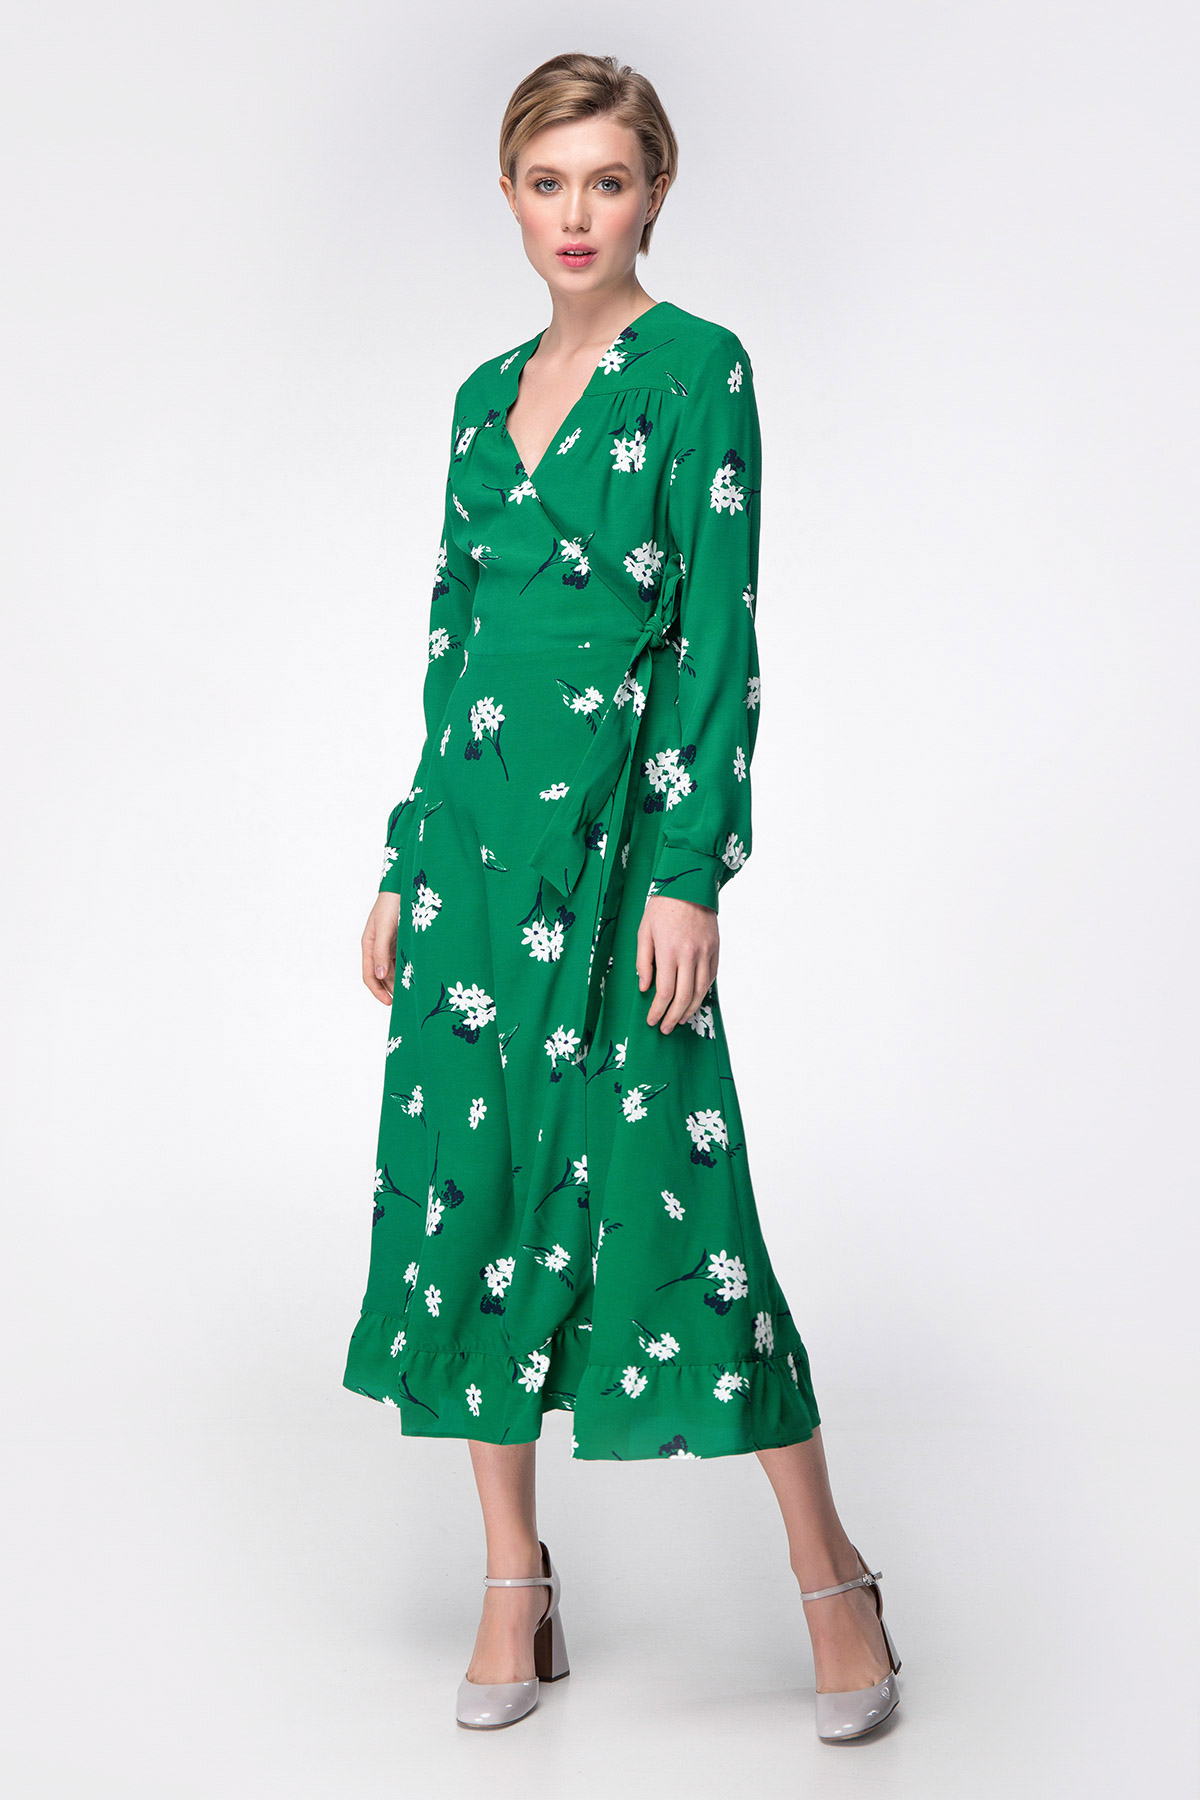 Green wrap mini dress with floral print, photo 1